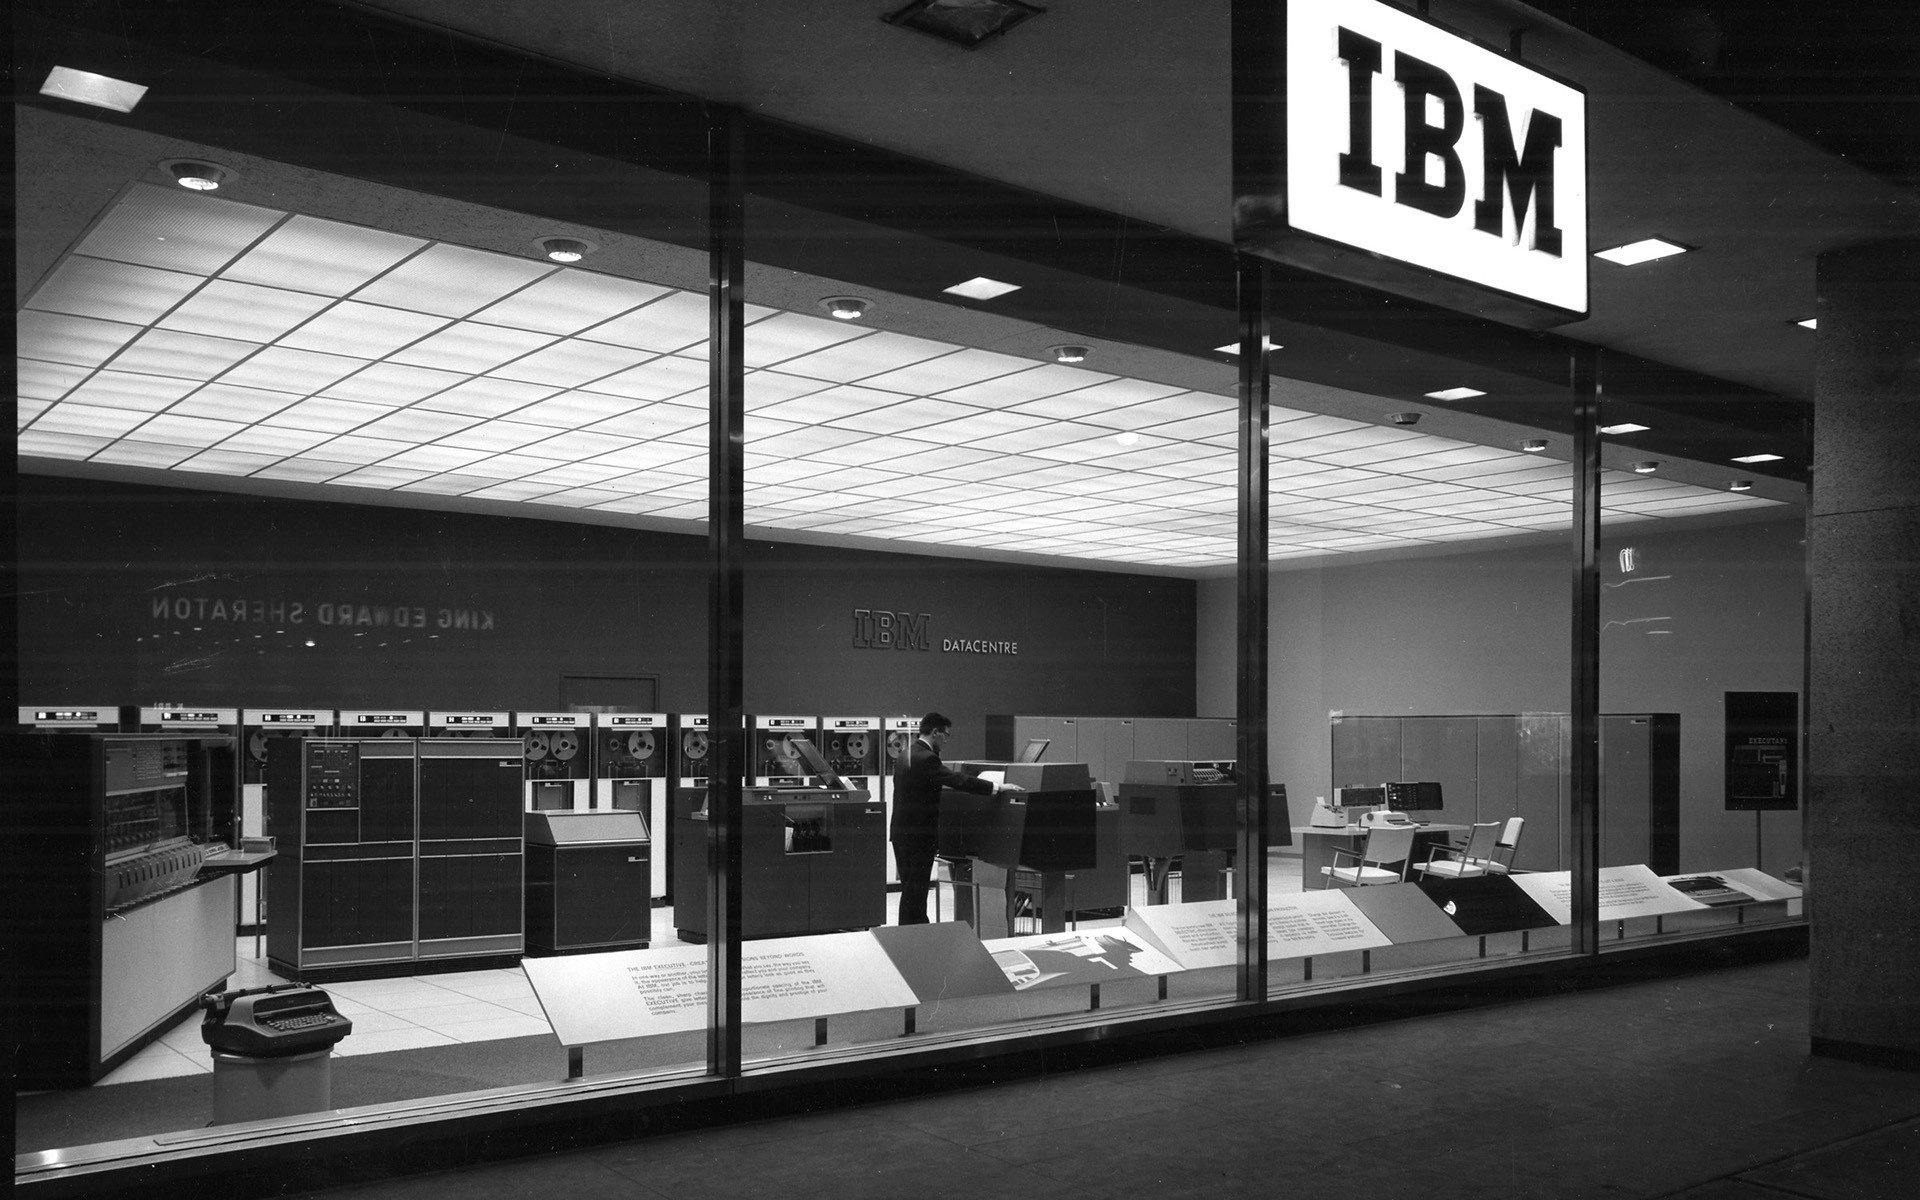 IBM computer wallpaper, Corporate elegance, Distinctive aesthetics, Professionalism personified, 1920x1200 HD Desktop